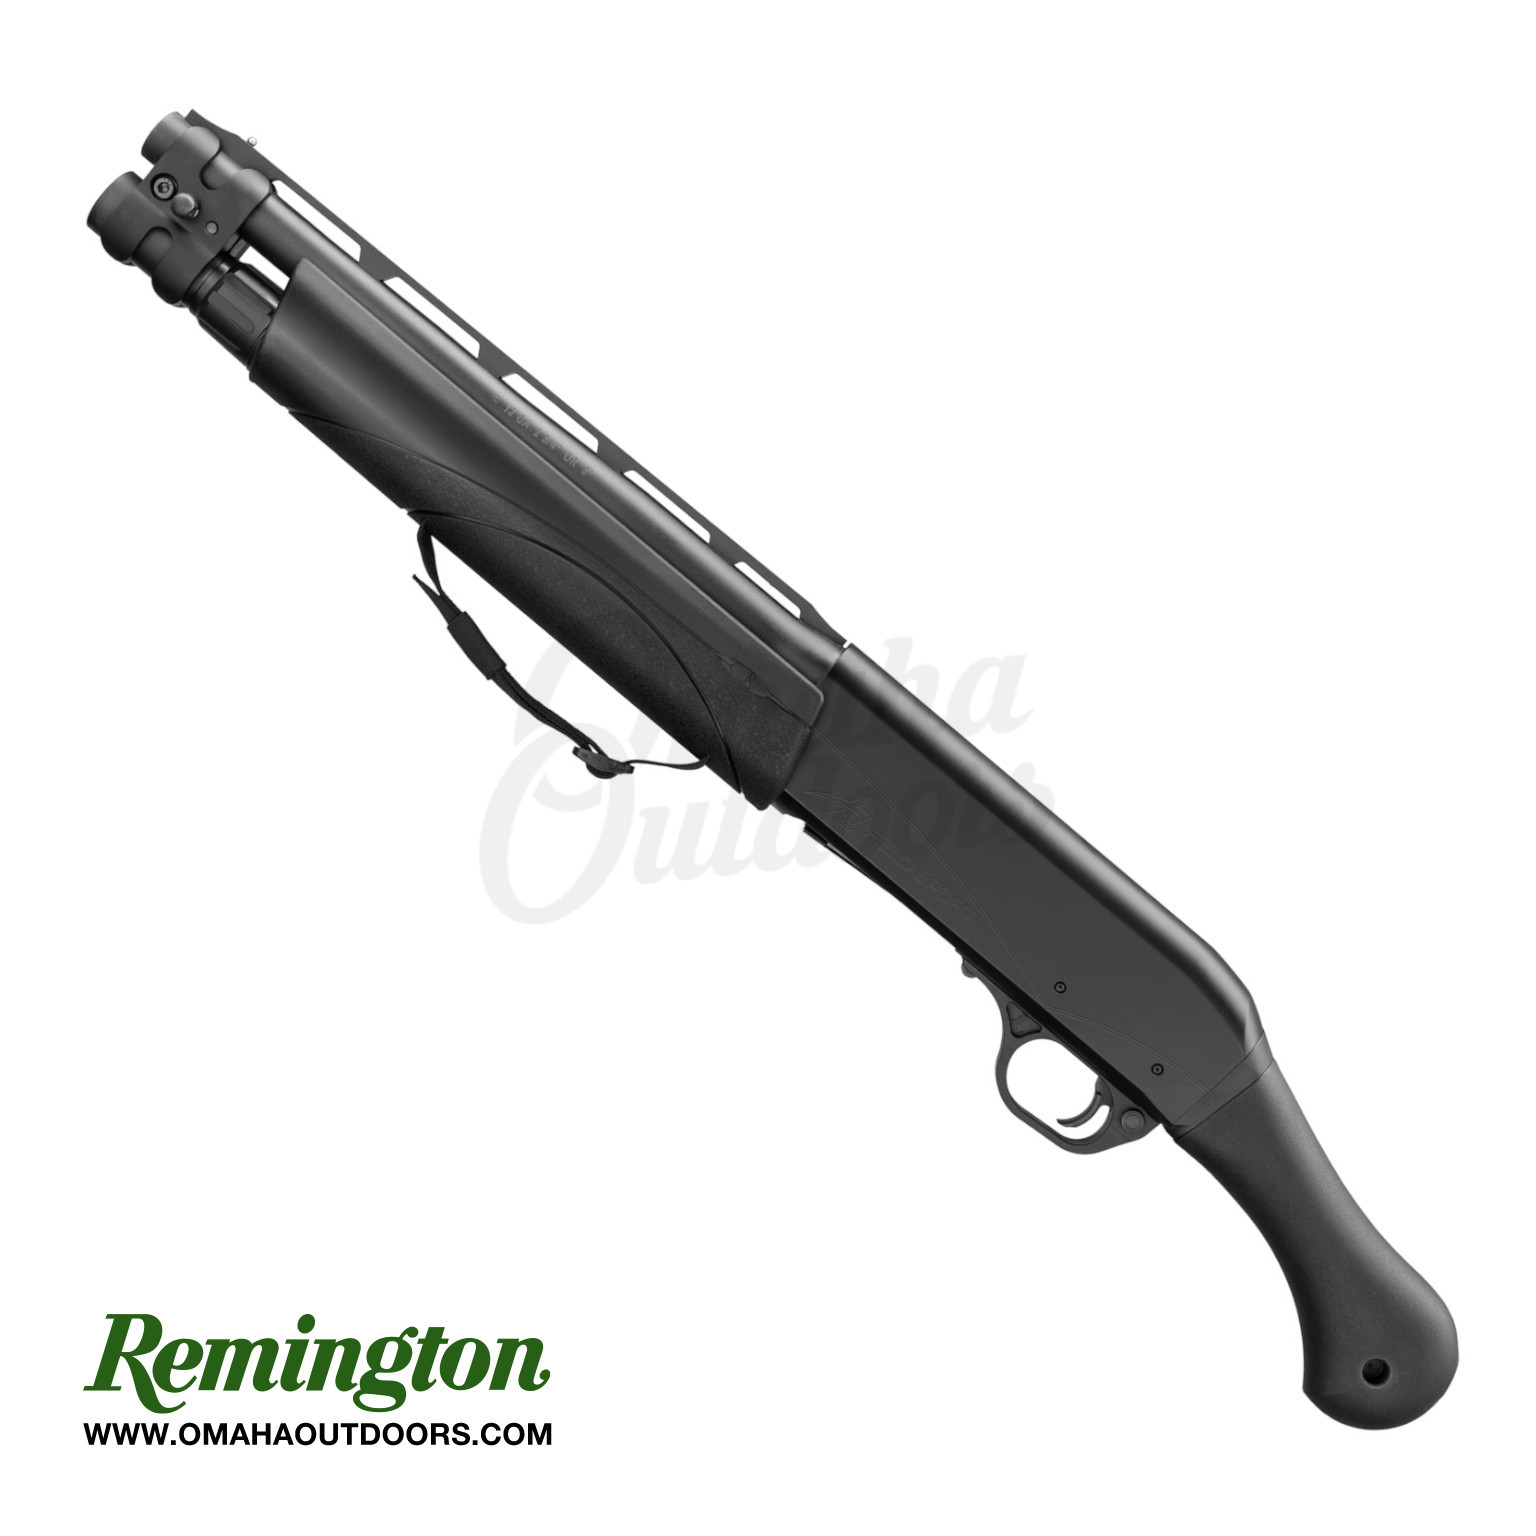 Remington V3 Tac-13 Review  The elusive V3 Tac-13 worth it?